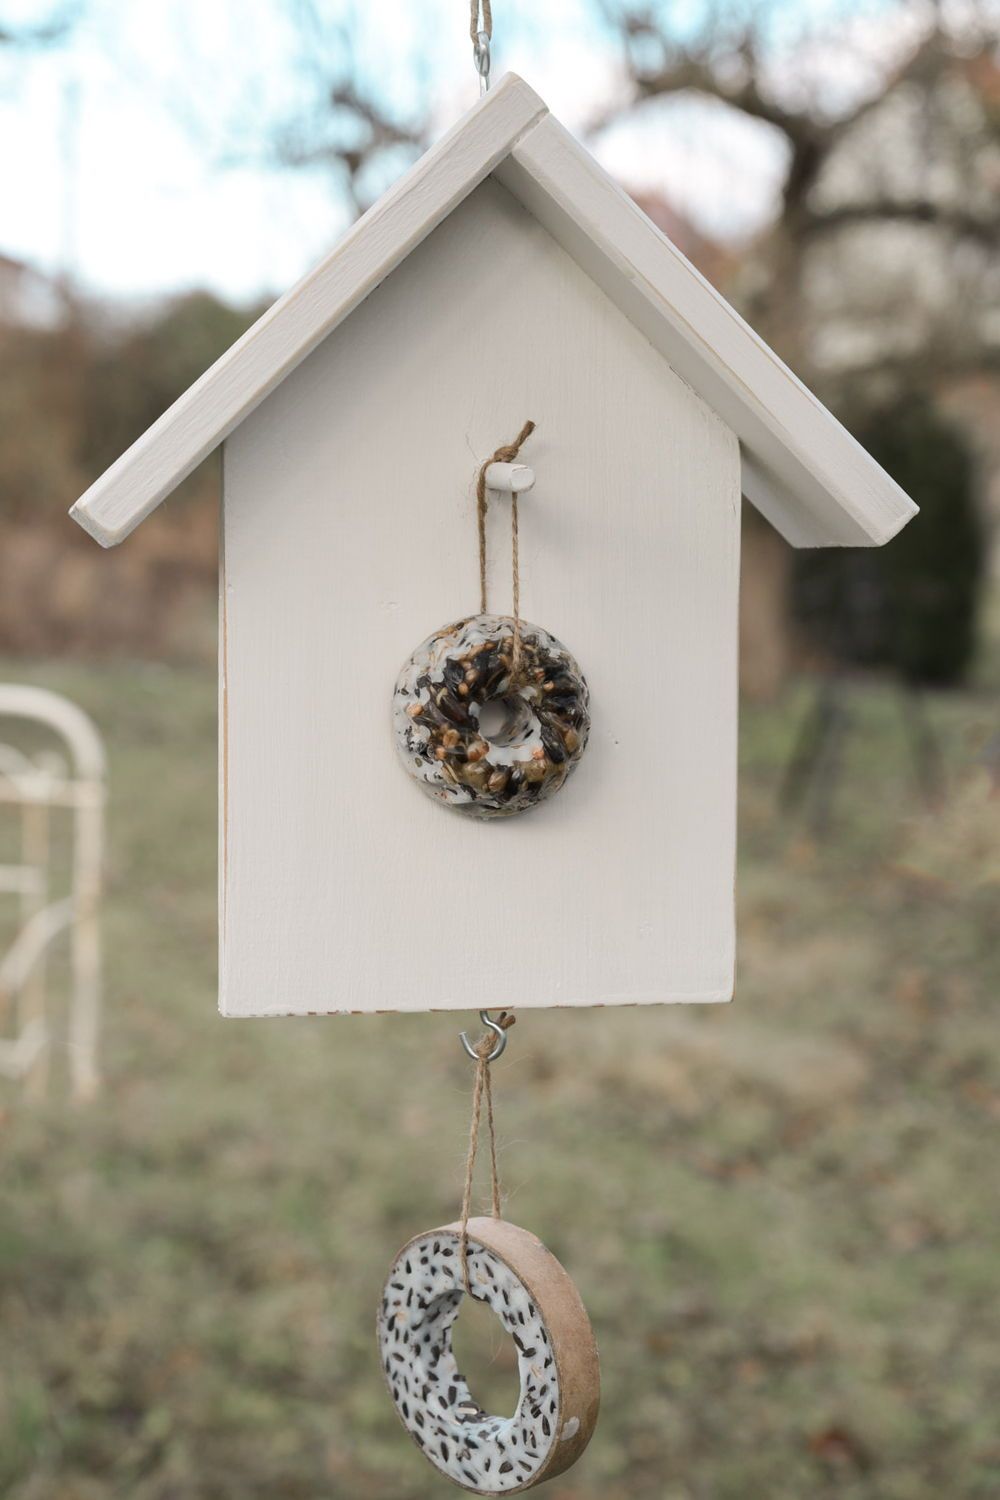 Kreative Ideen Gartendeko Holz Neu Kreative Diy Idee Für Den Winter Vogelhaus